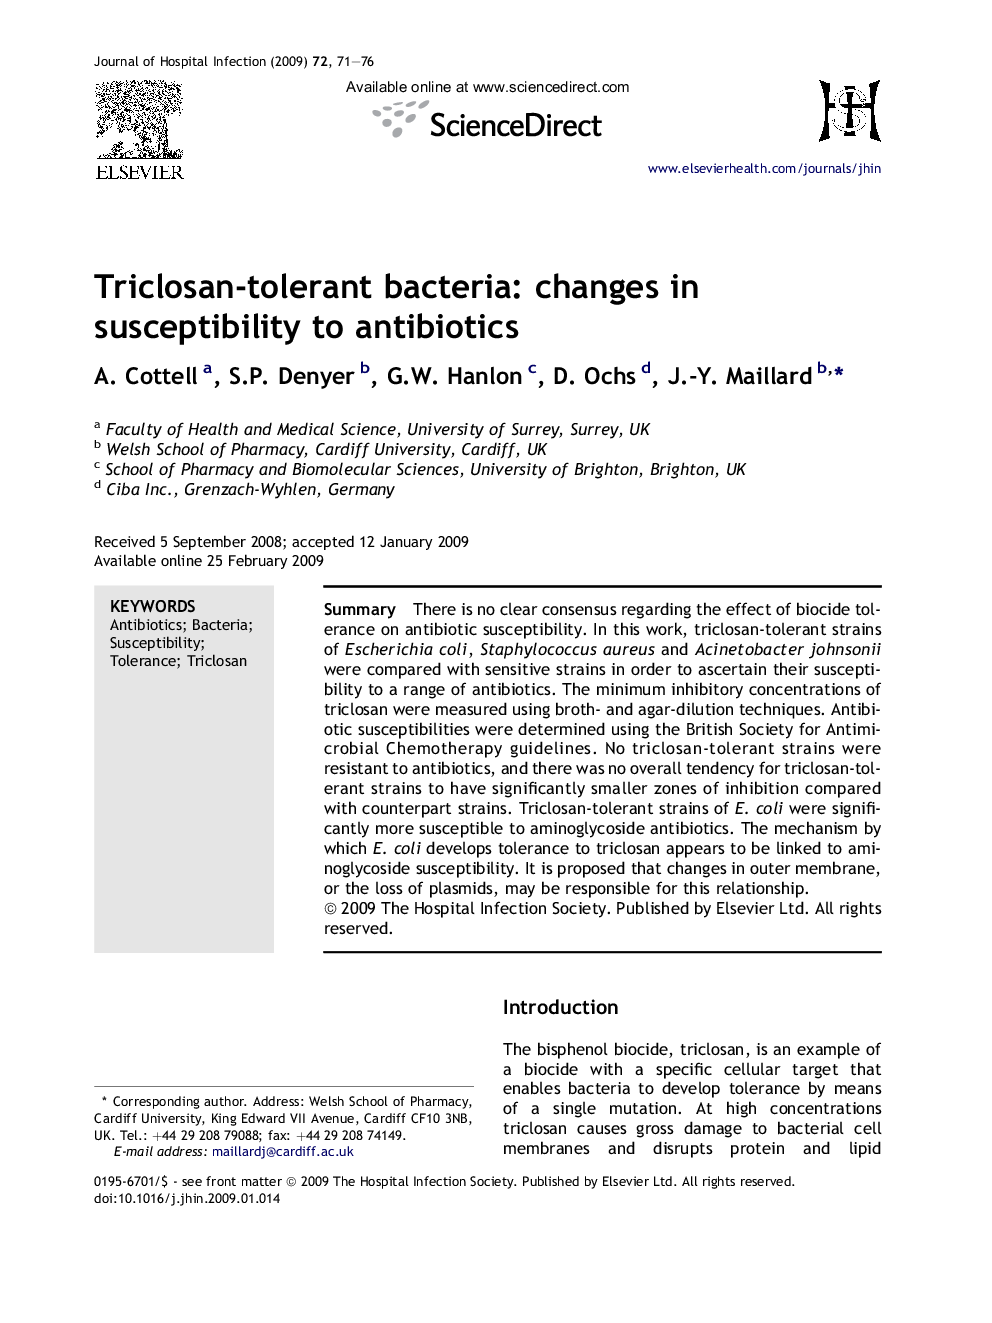 Triclosan-tolerant bacteria: changes in susceptibility to antibiotics